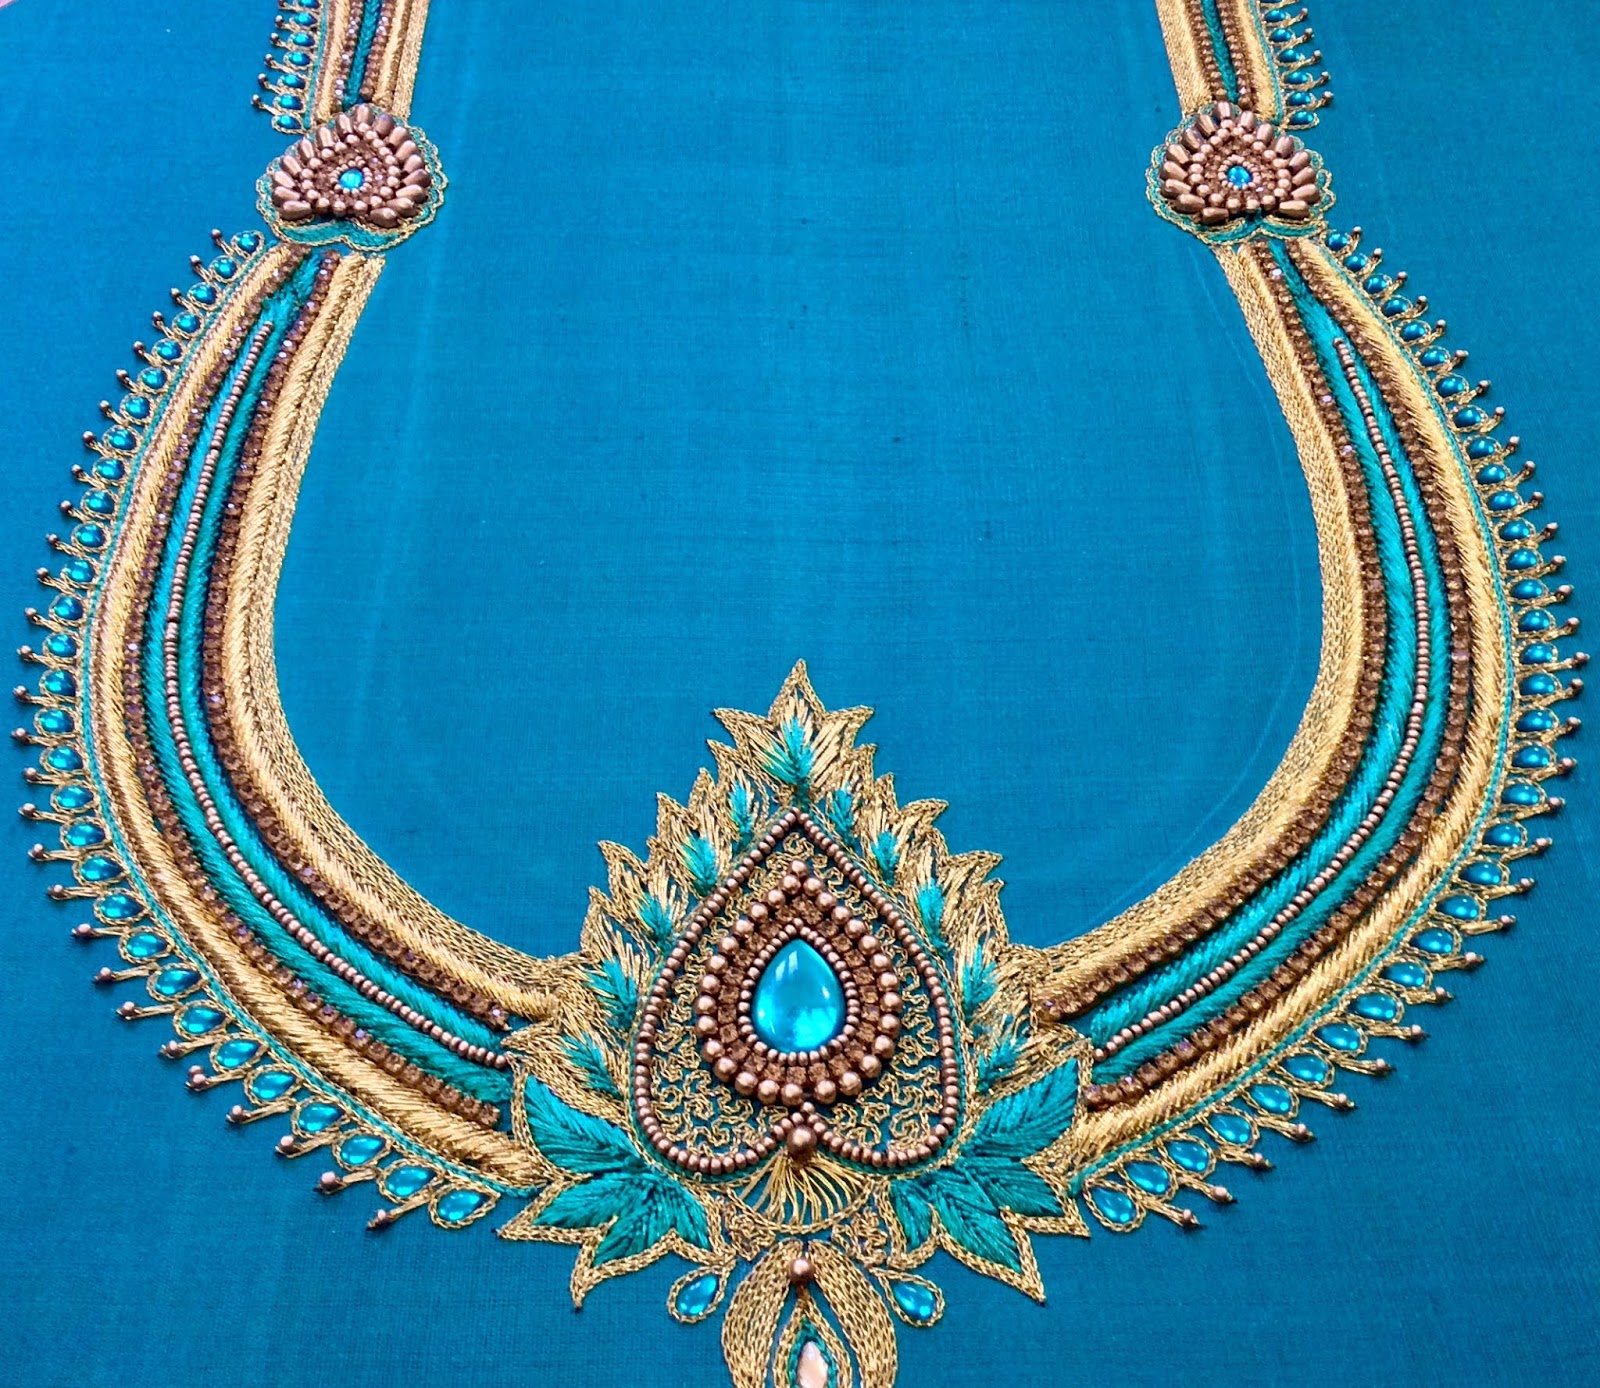 Jewelry pattern on saree blouse